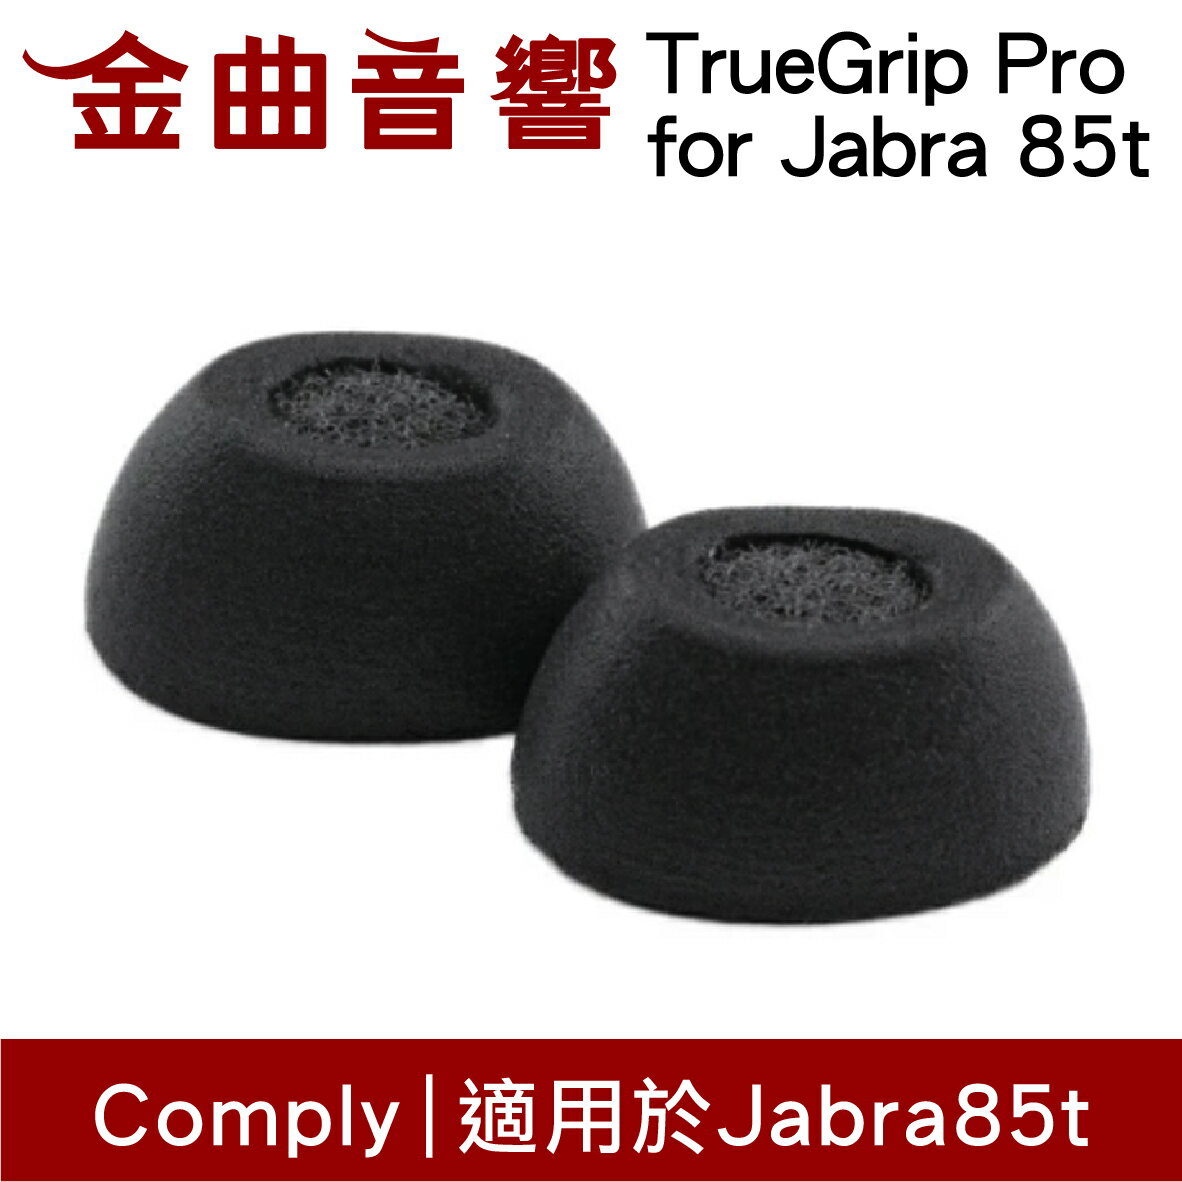 【點數 9%】 Comply TrueGrip Pro for Jabra 85t 海綿耳塞 TWo-220-C | 金曲音響